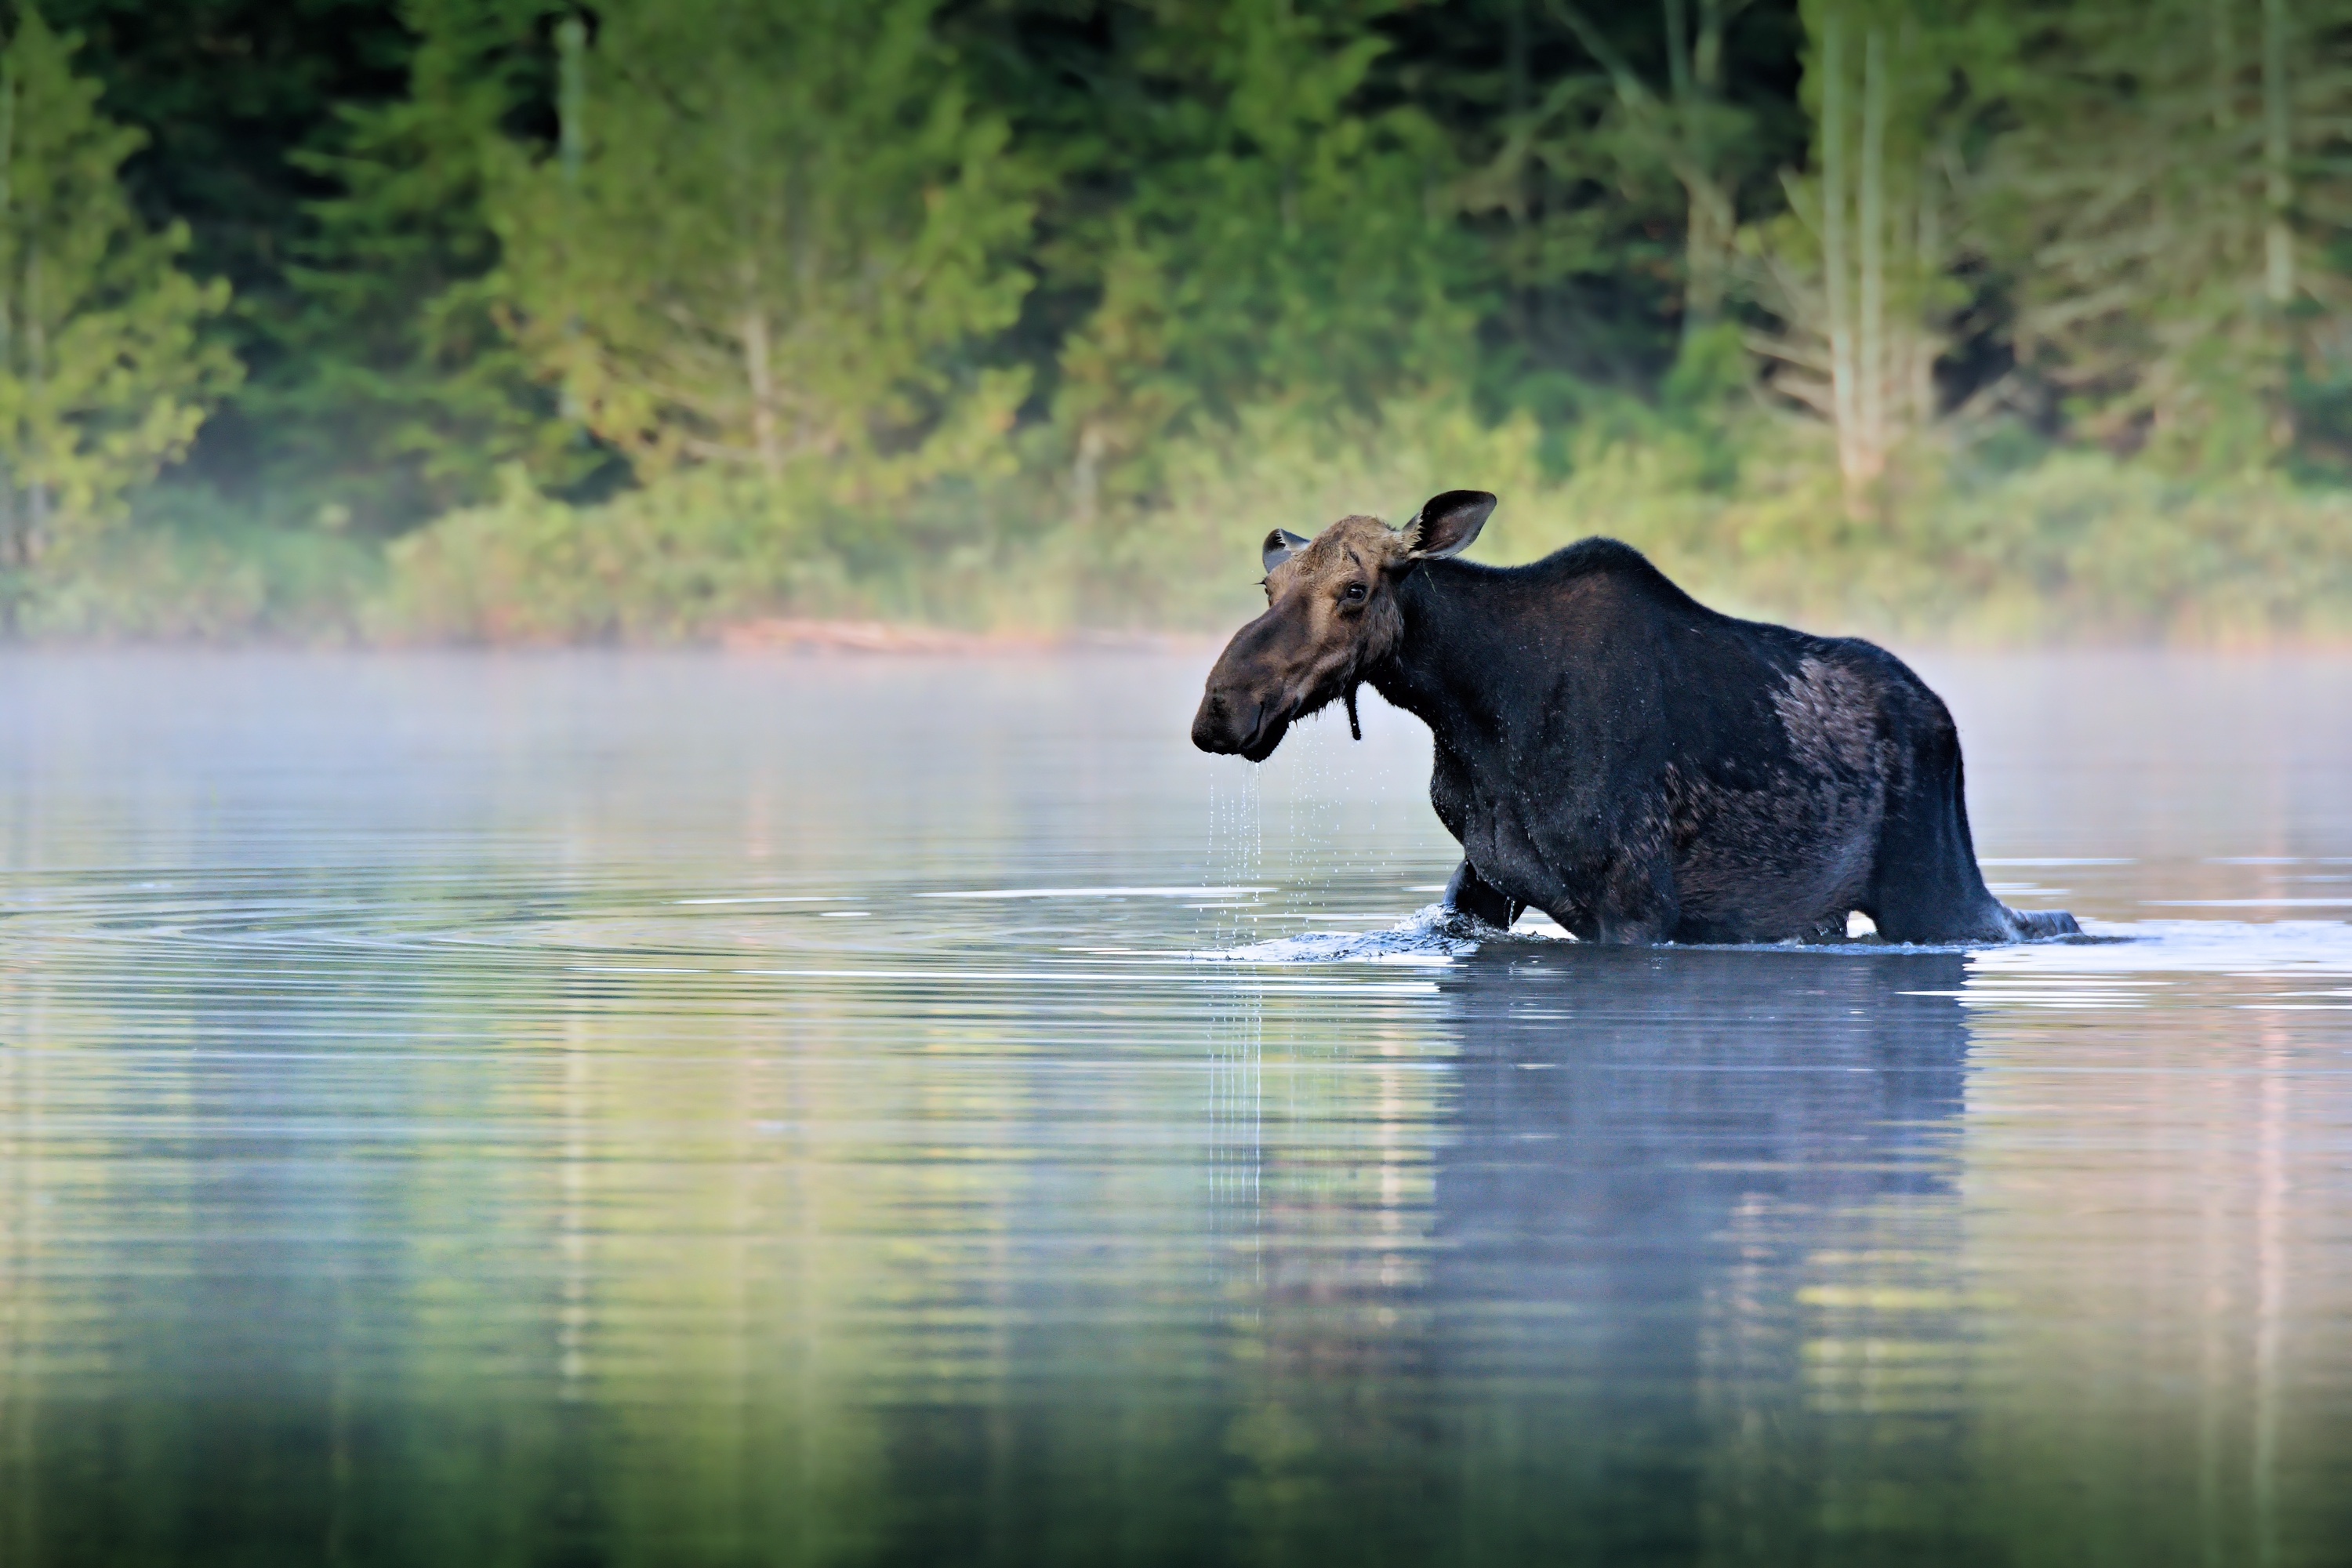 A moose walks through a water ford